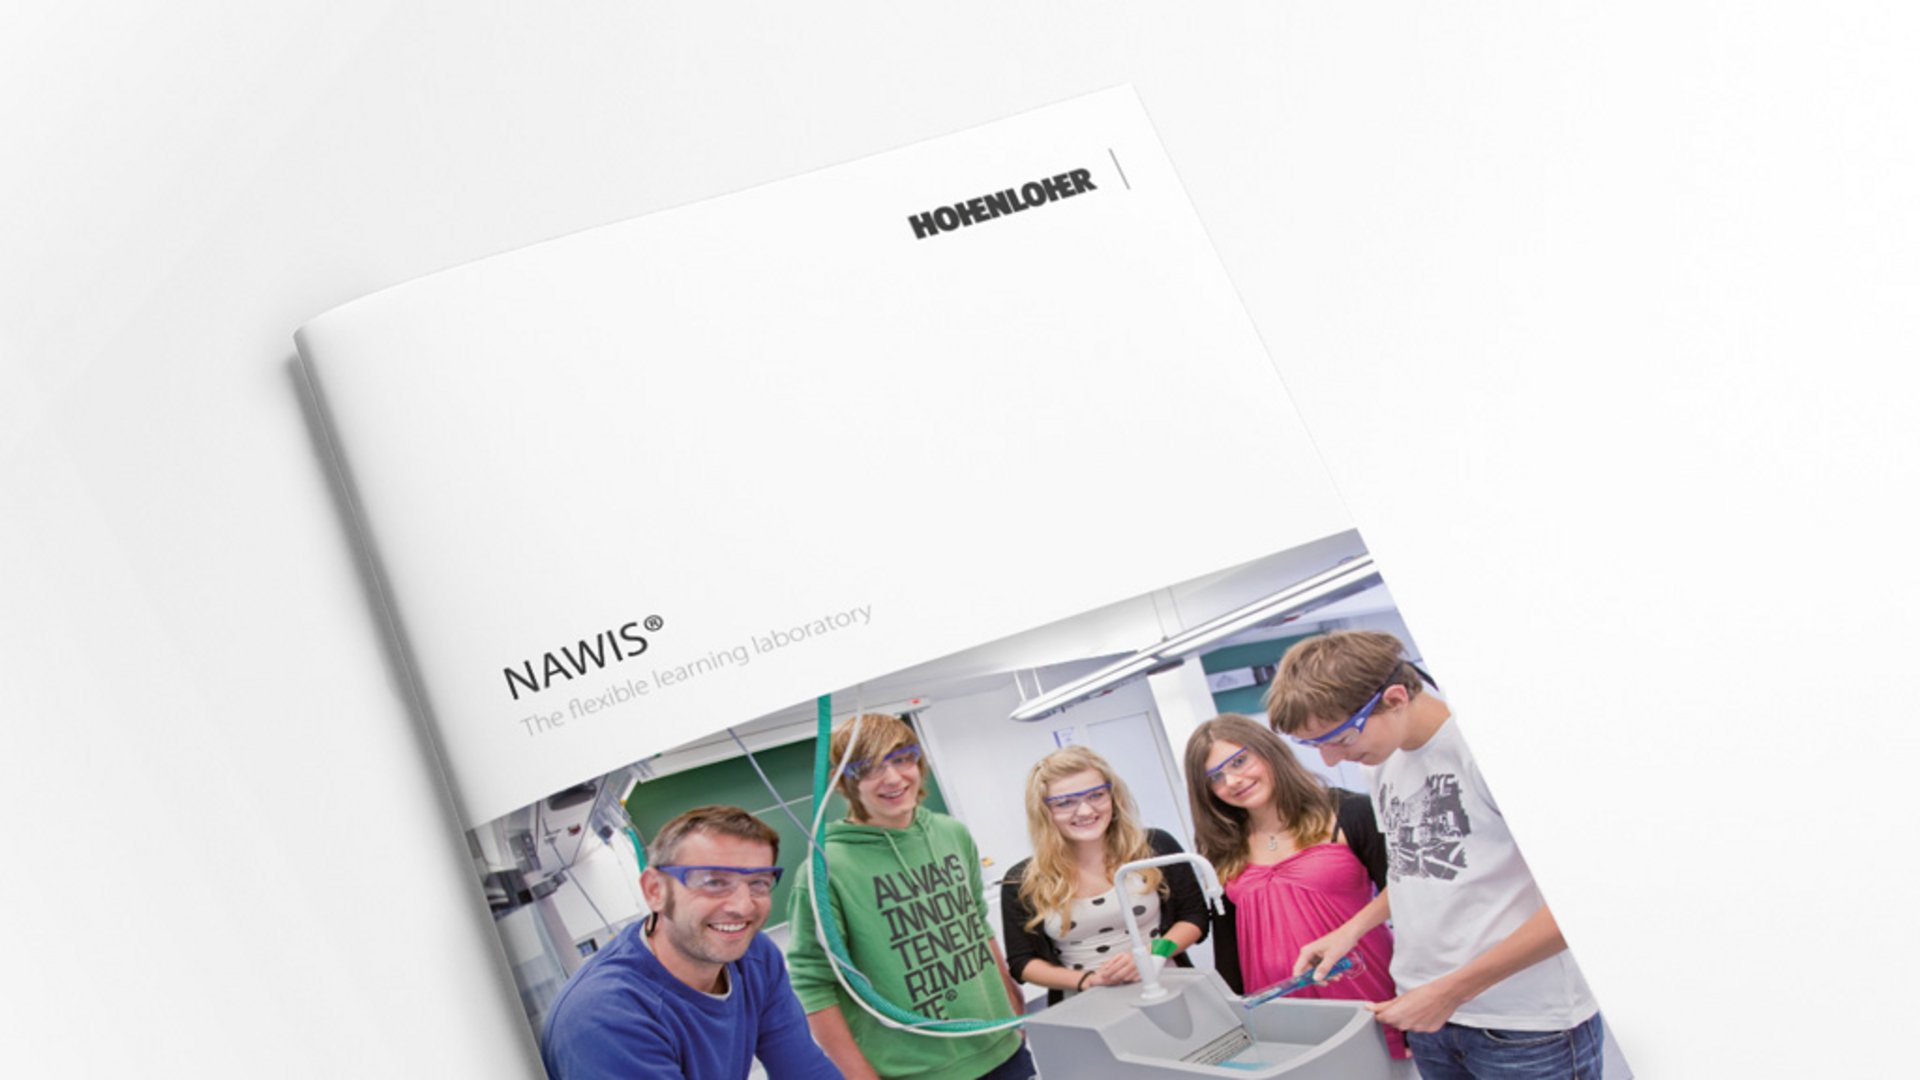 Image: Learning laboratory NAWIS® brochure